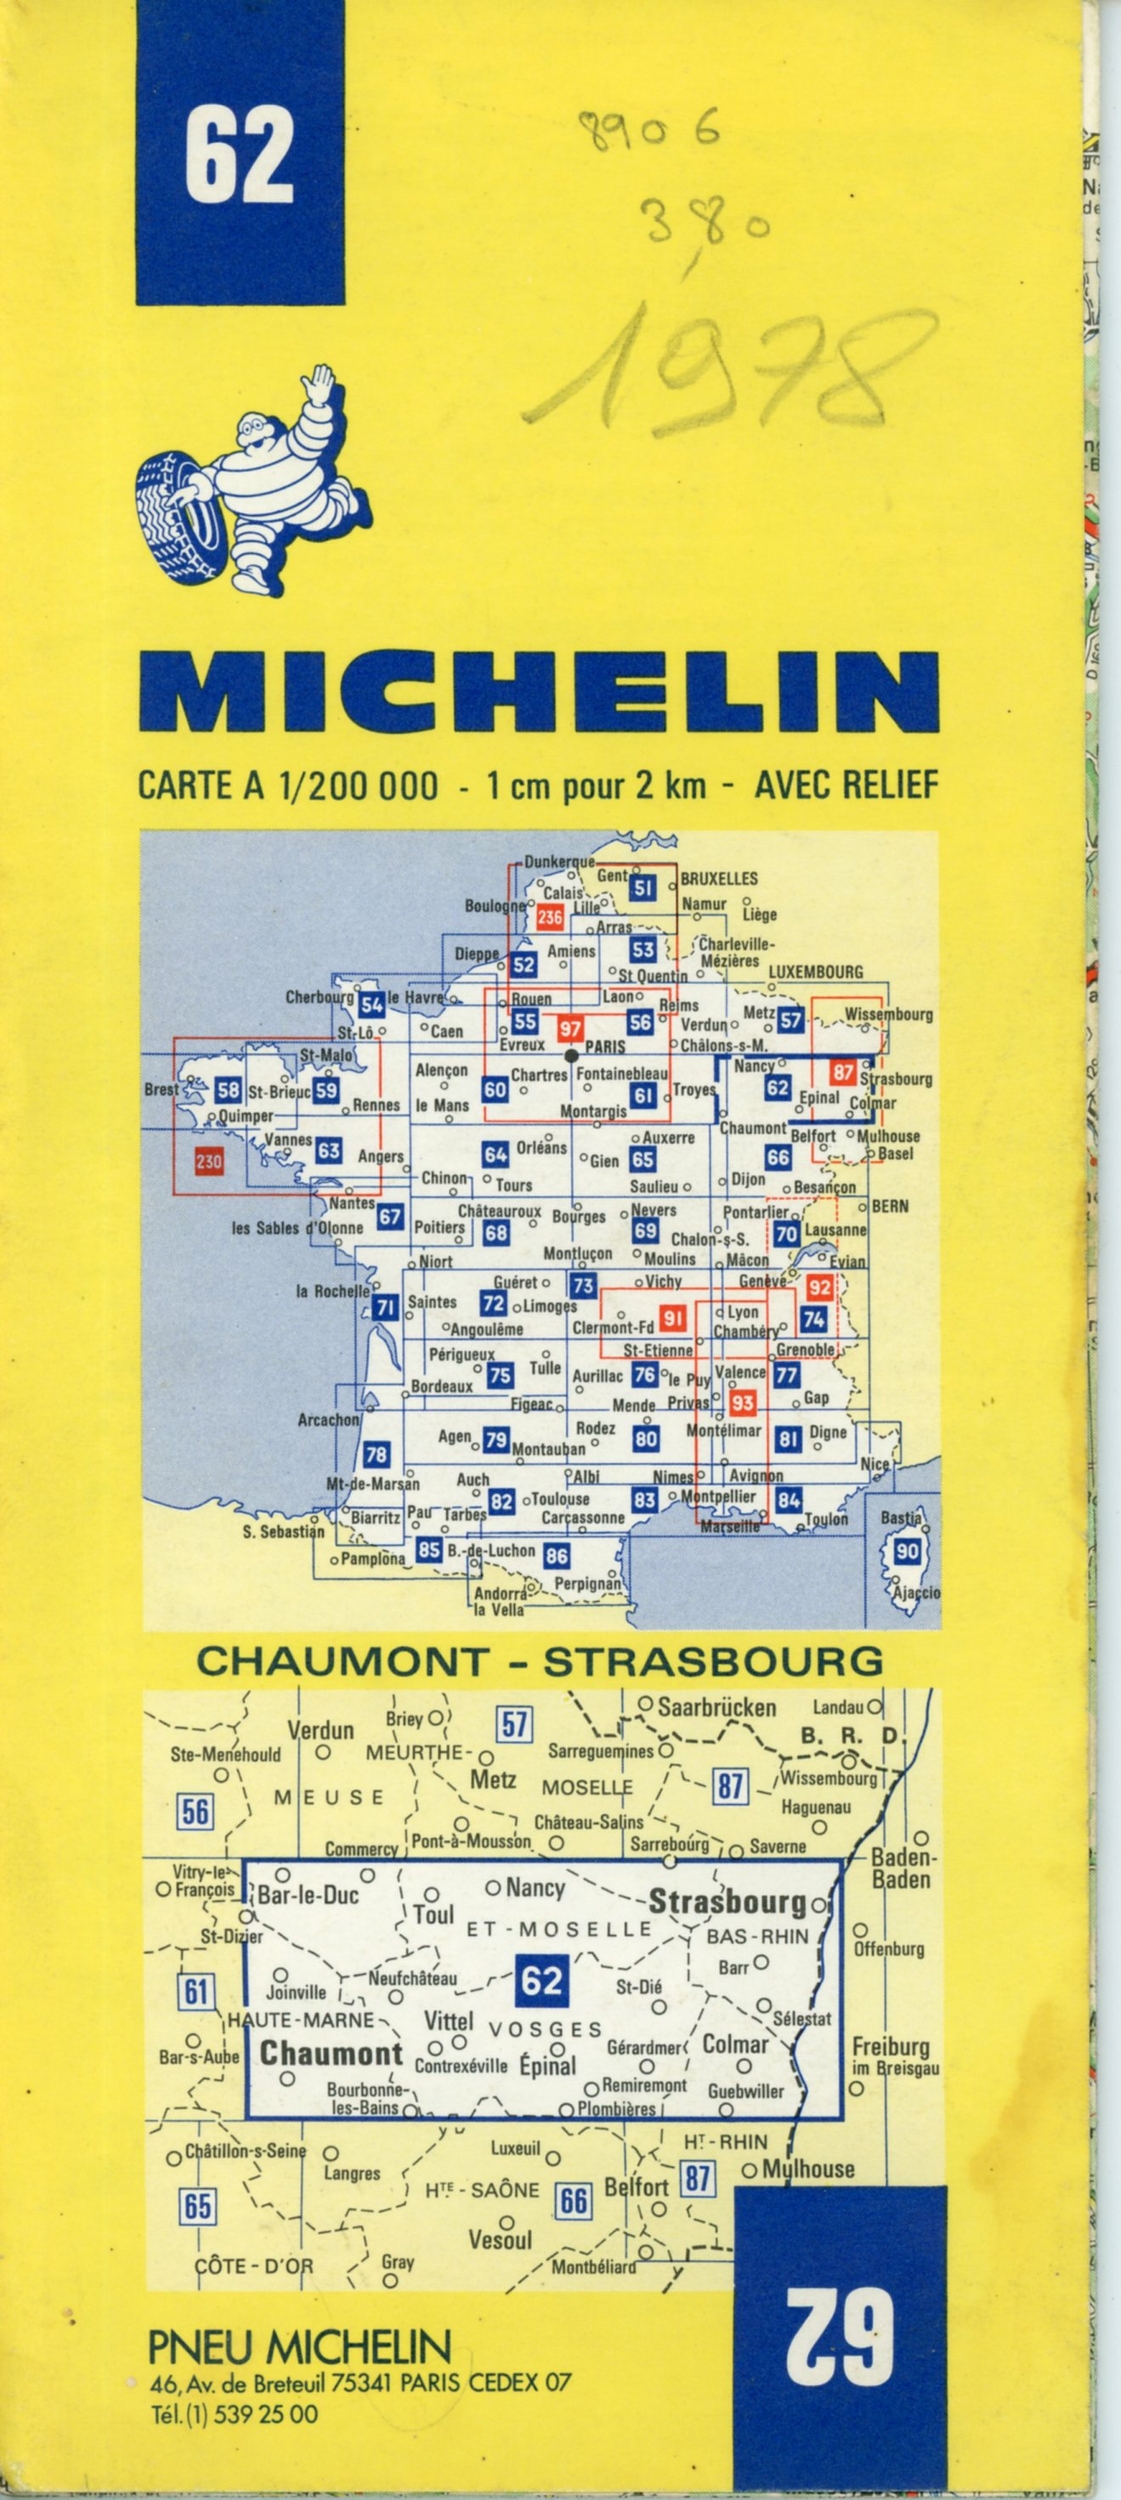 CARTE-ROUTIÈRE-MICHELIN-62-1978-LEMASTERBROCKERS-COLLECTION-CARTE-MICHELIN